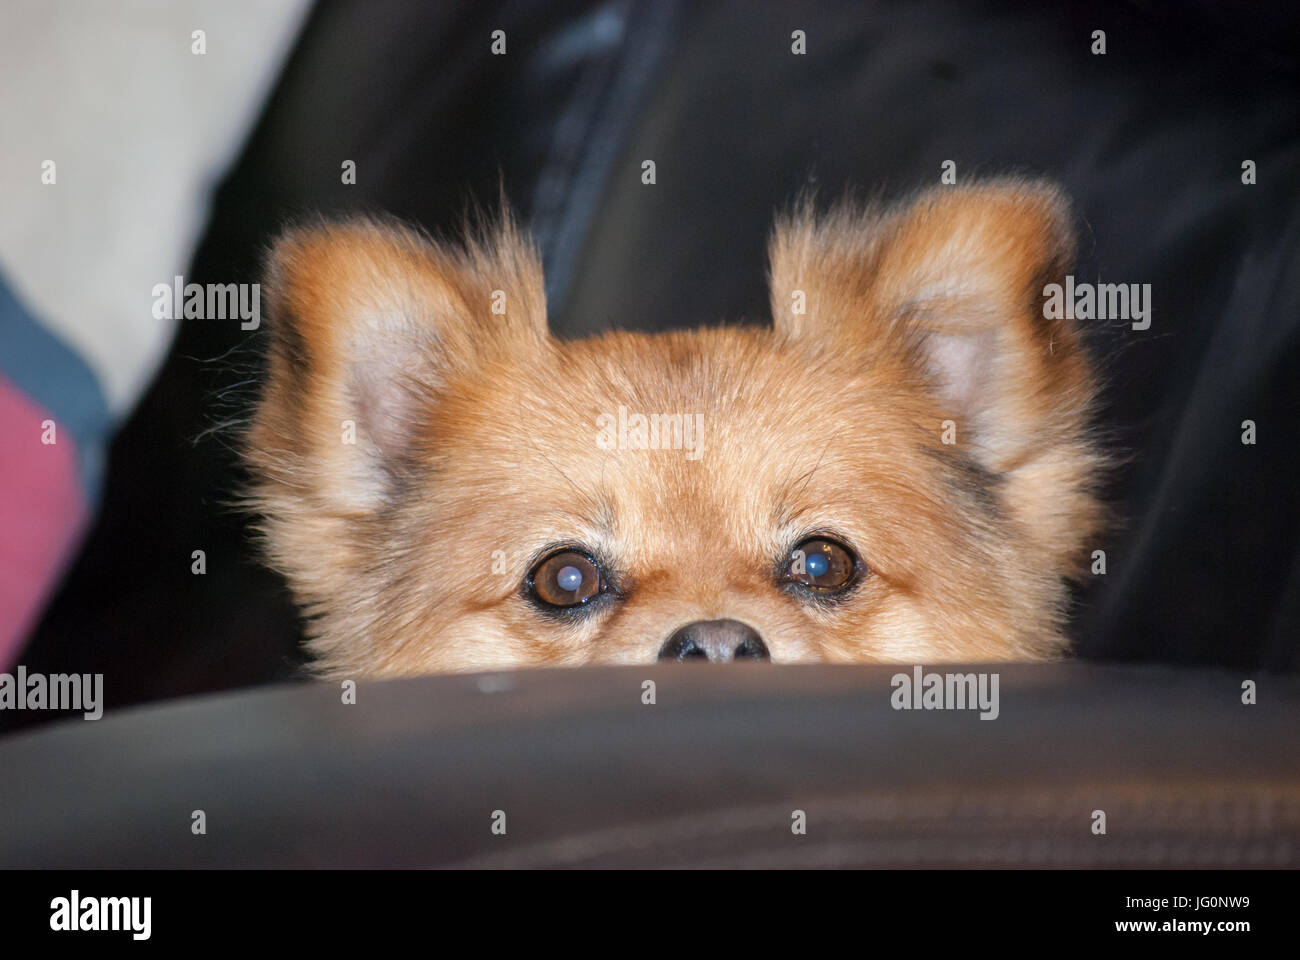 Pomeranian dog peeking at camera with big eyes Stock Photo